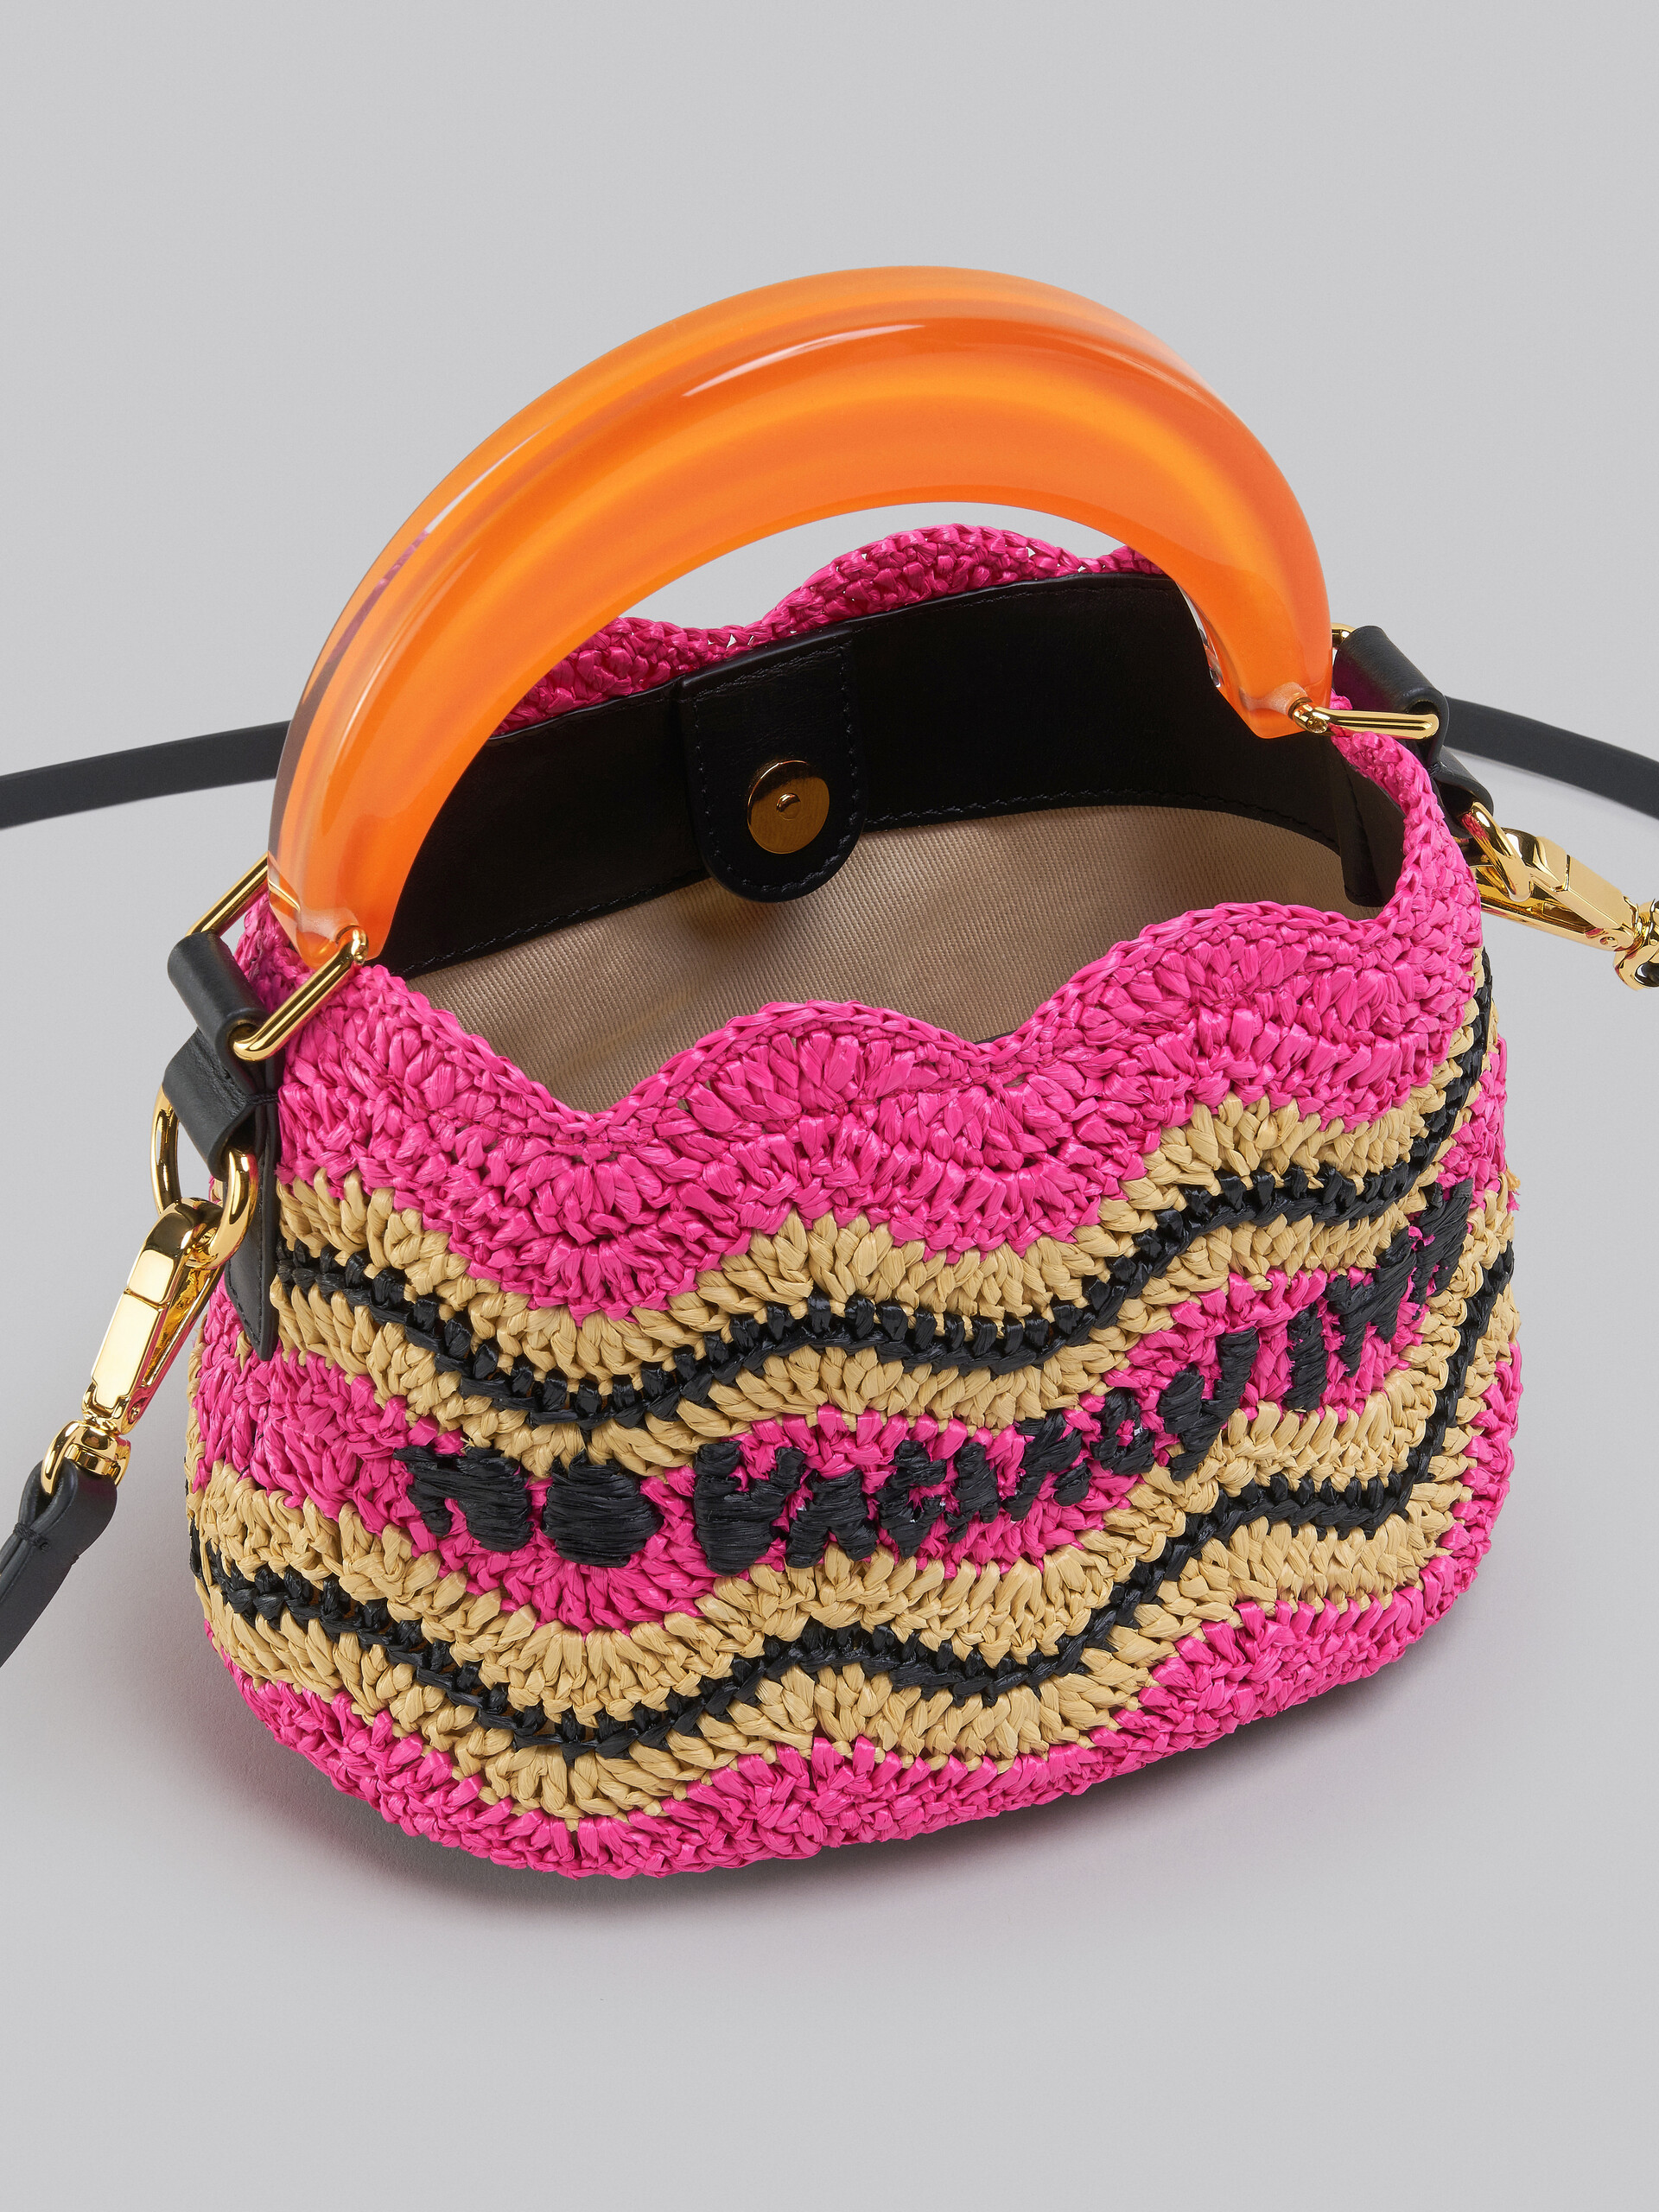 Marni x No Vacancy Inn - Venice Mini Bucket in fuchsia crochet raffia - Shoulder Bag - Image 4